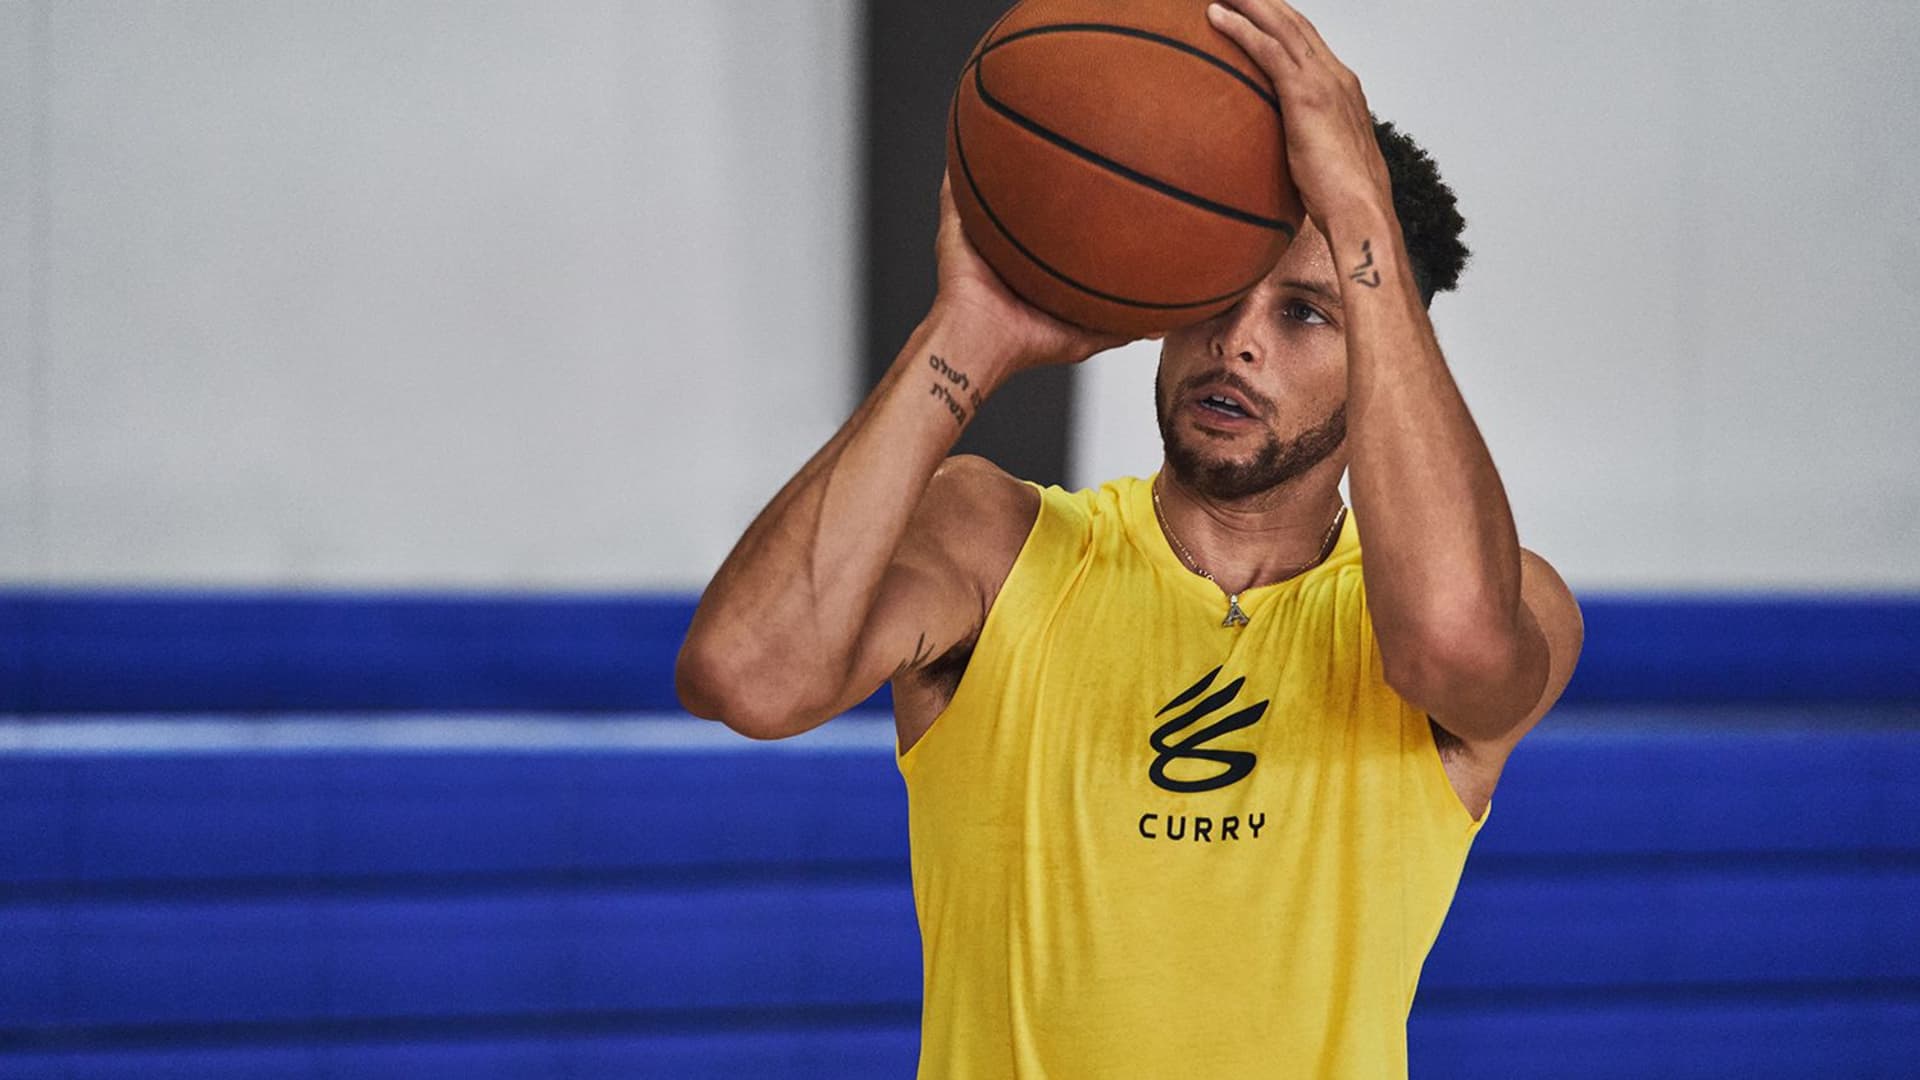 Nike Golden State Warriors Steph Curry Association 2019 Kids